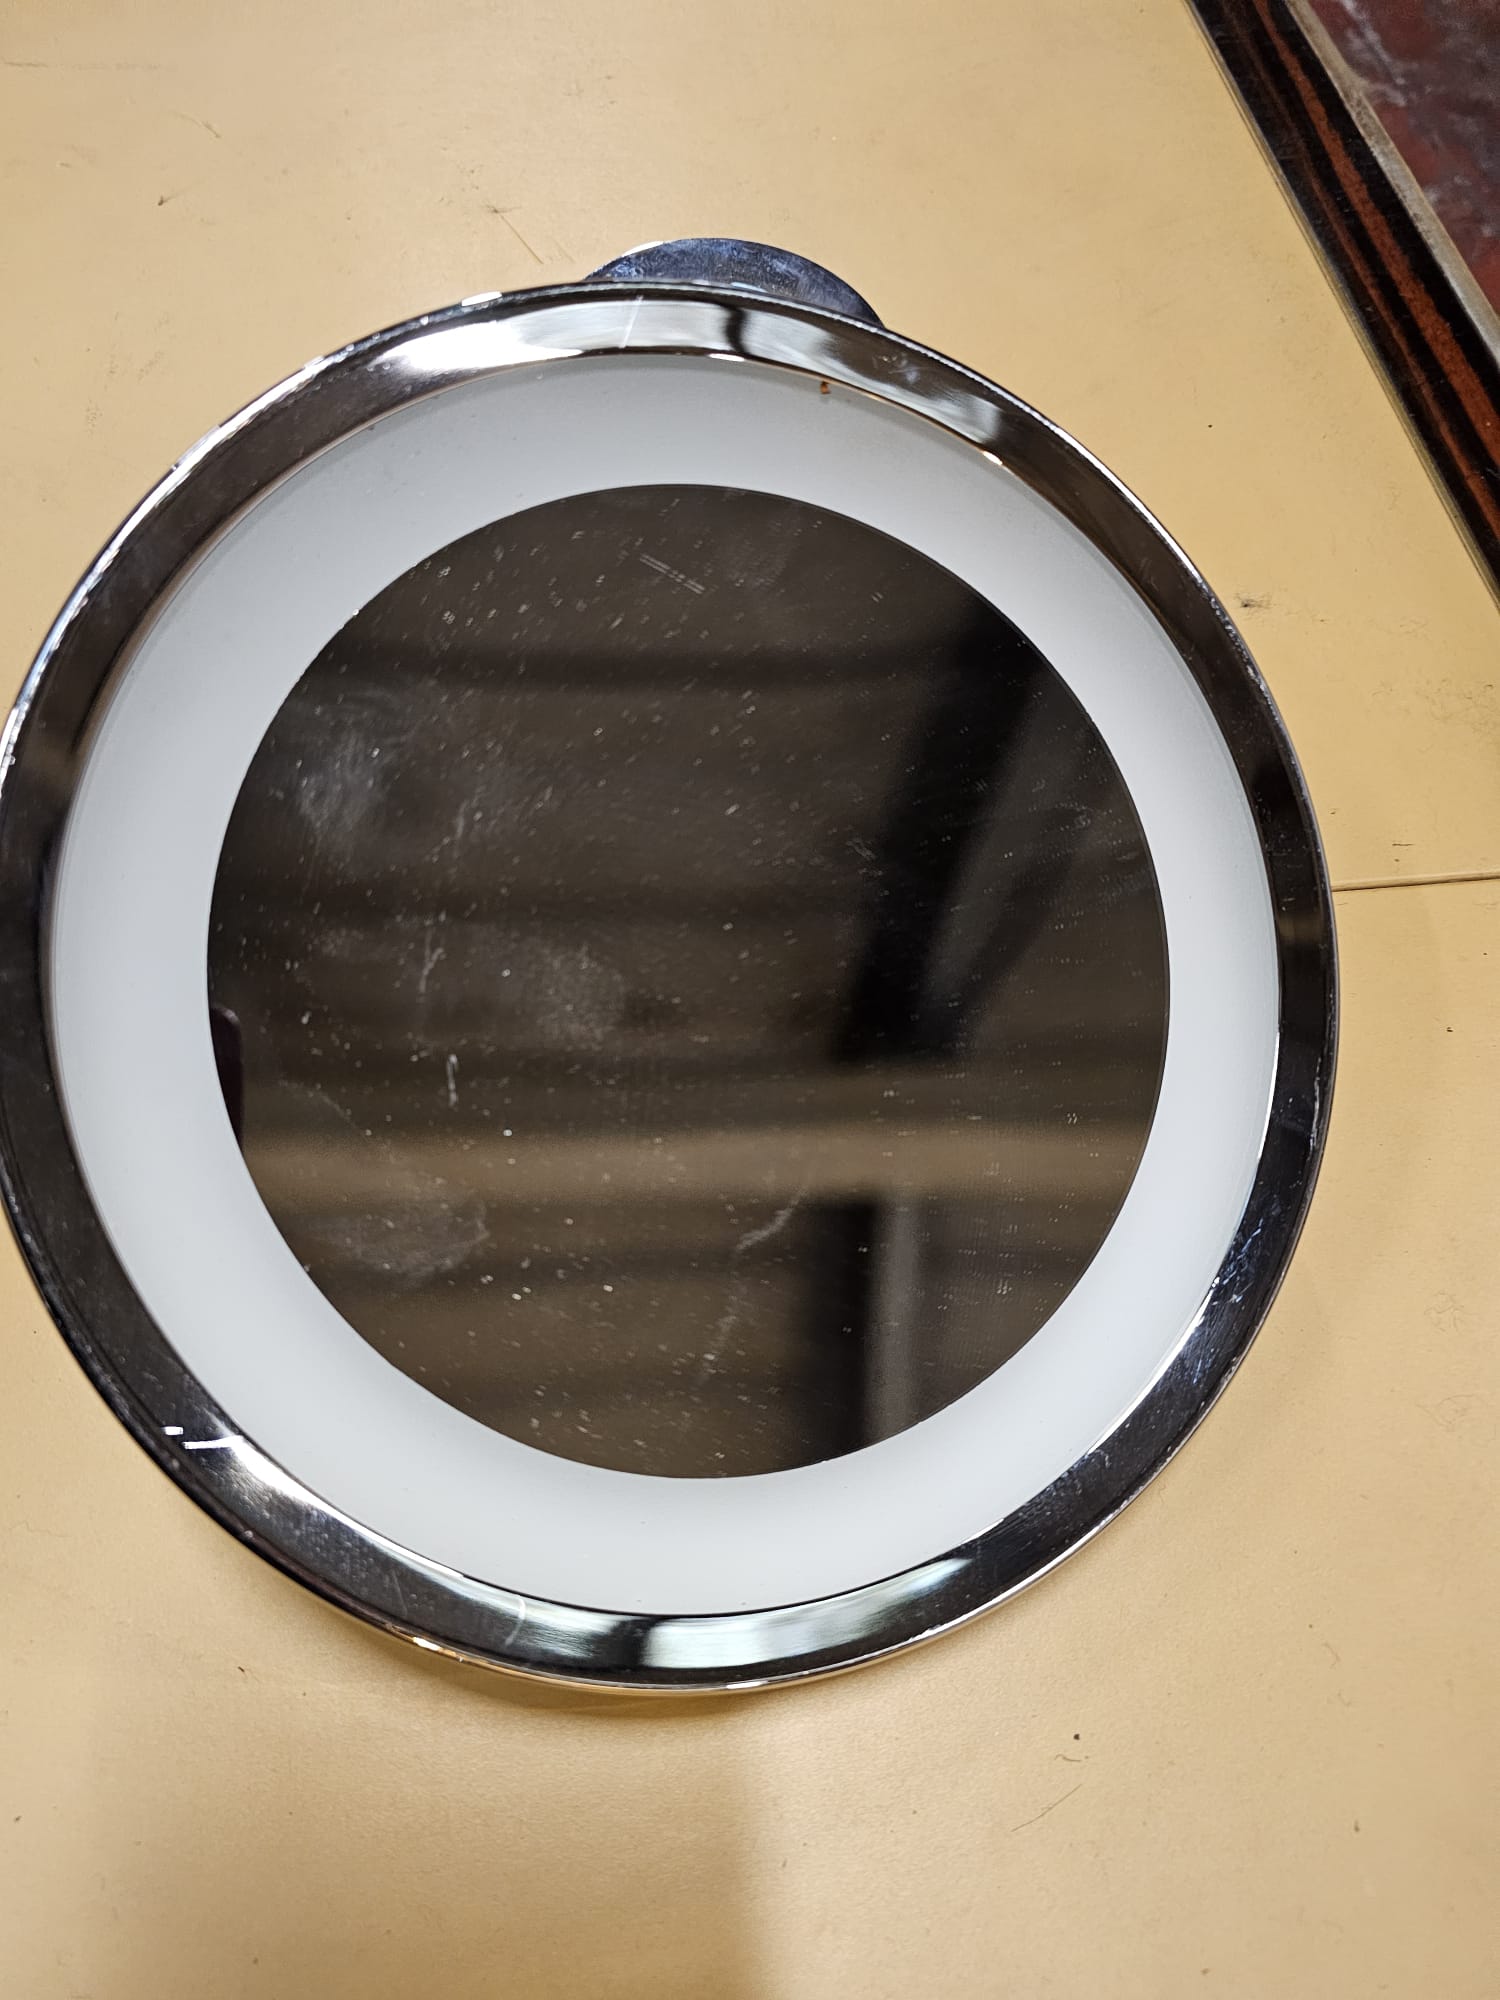 LED Illuminated Magnifying Vanity Mirror For Bathroom Round Ingress Protection Rating IP52 - Image 3 of 3